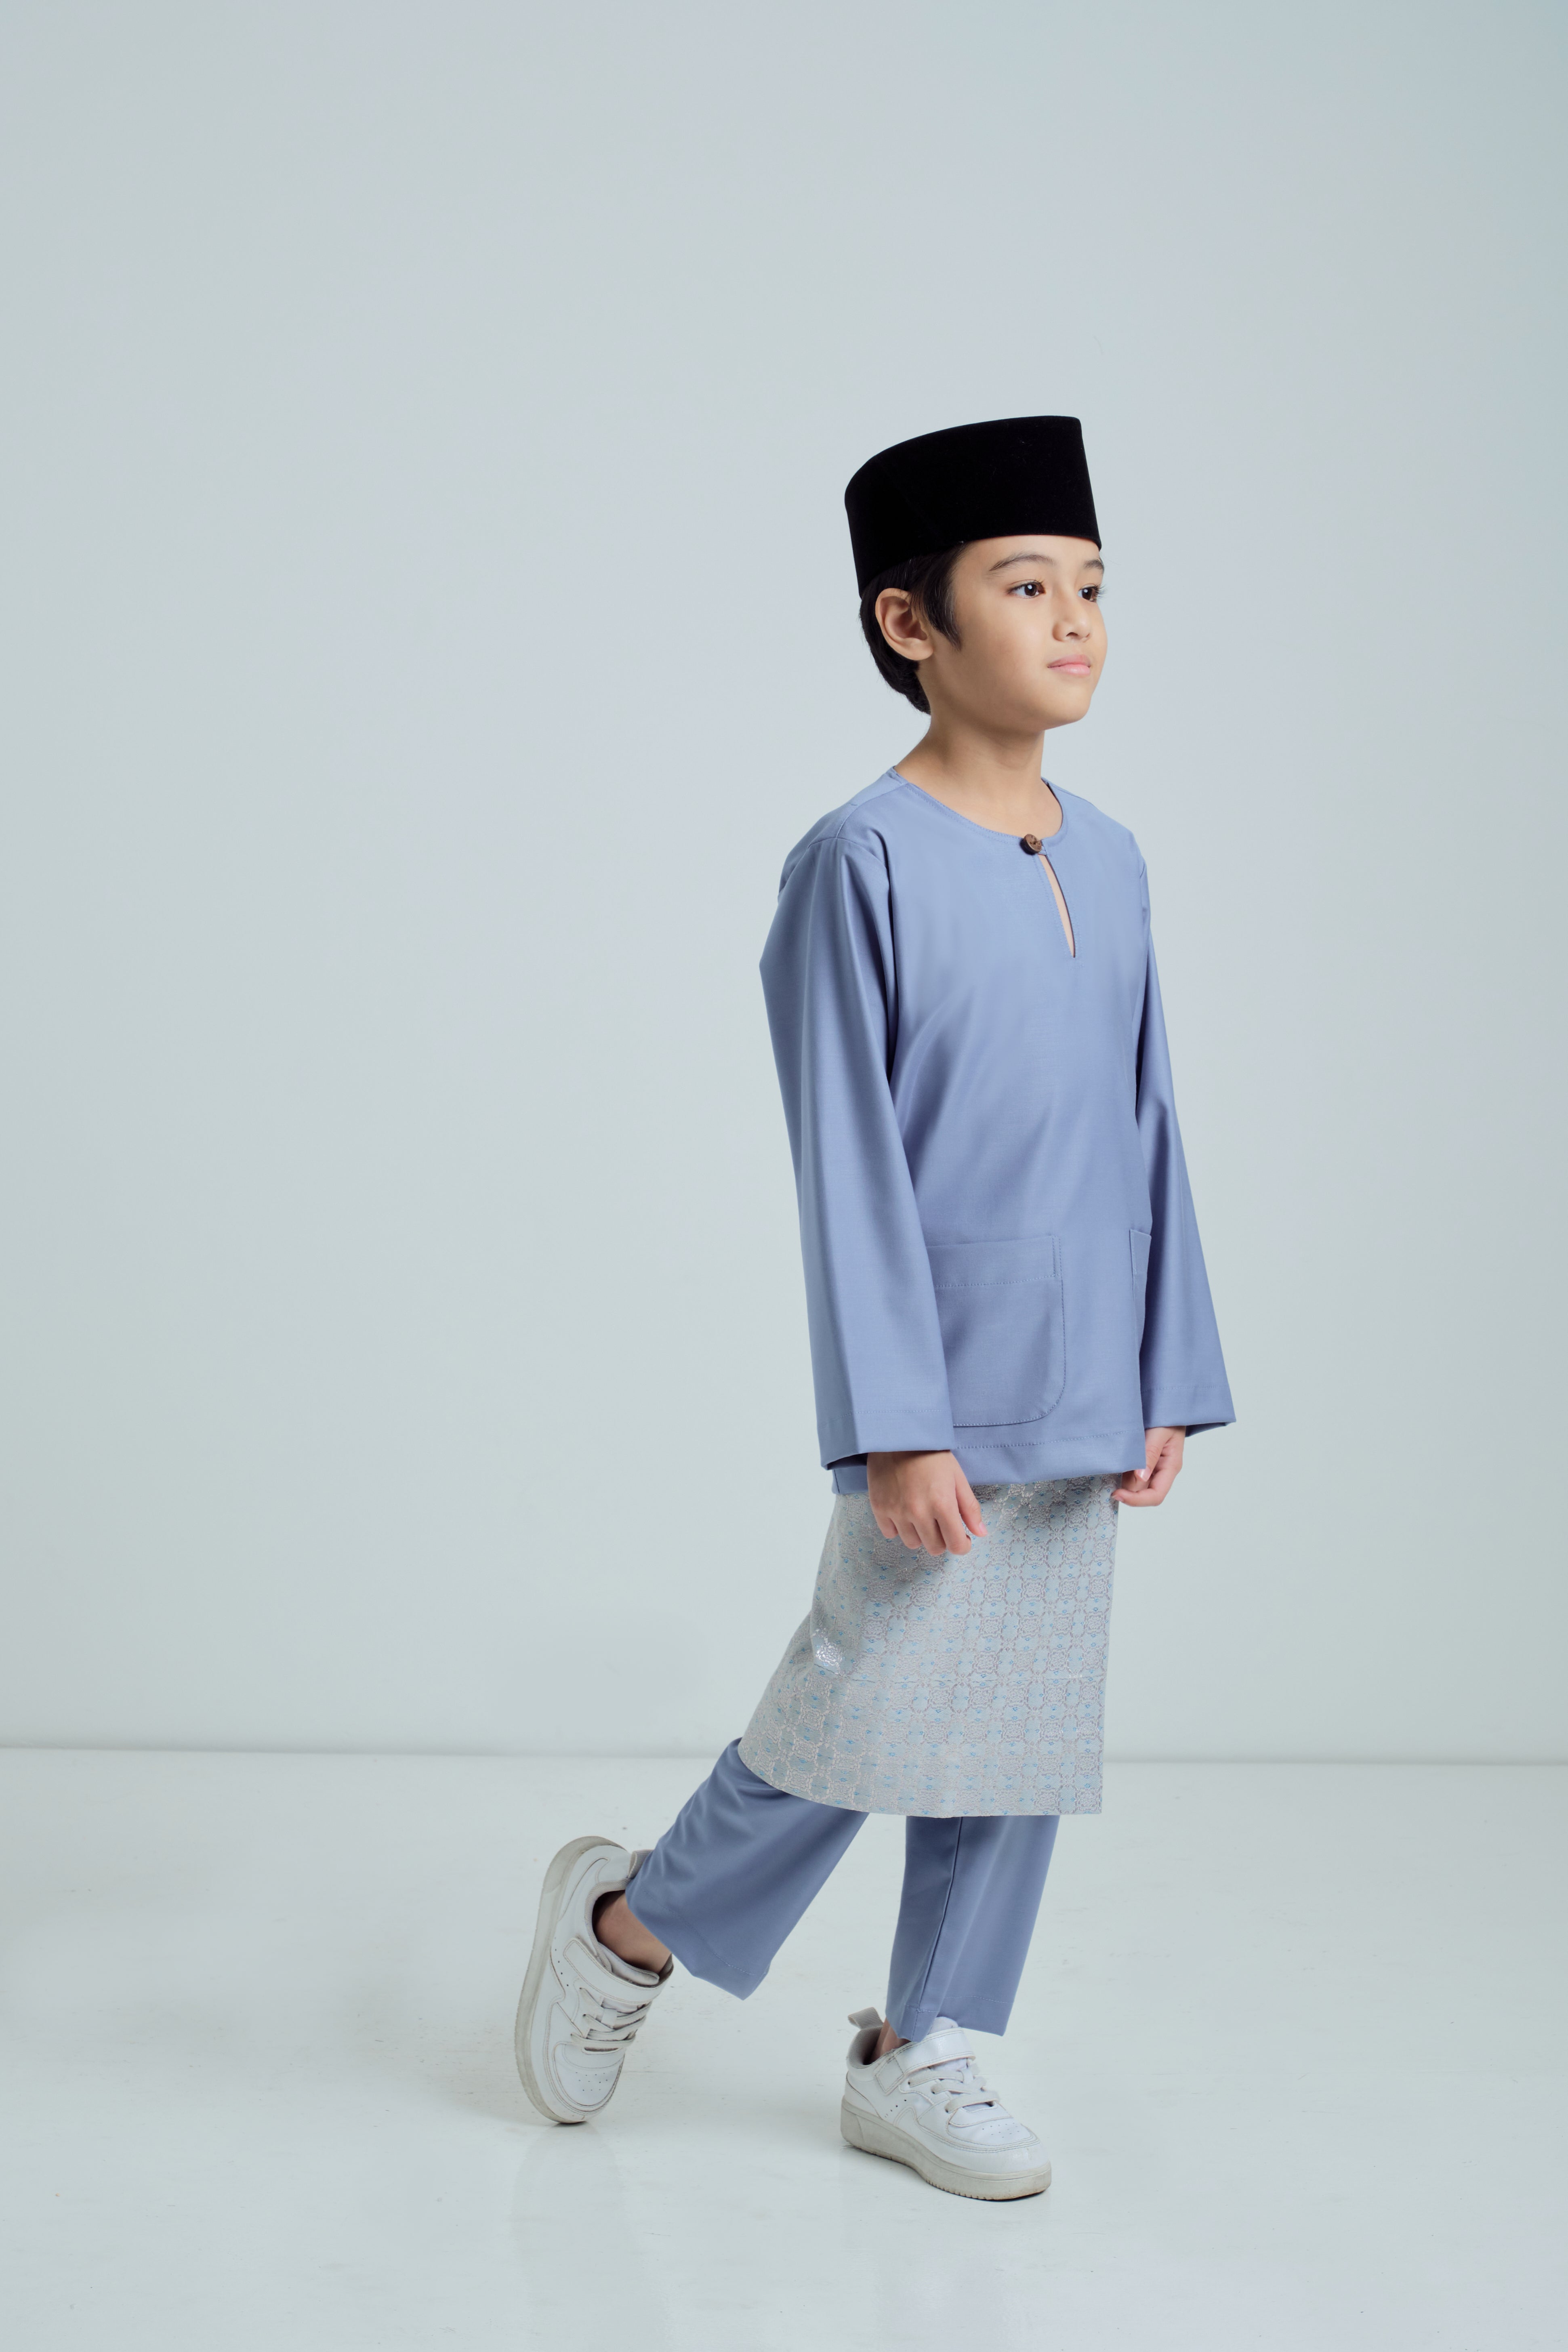 Patawali Boys Baju Melayu Teluk Belanga - Stone Blue